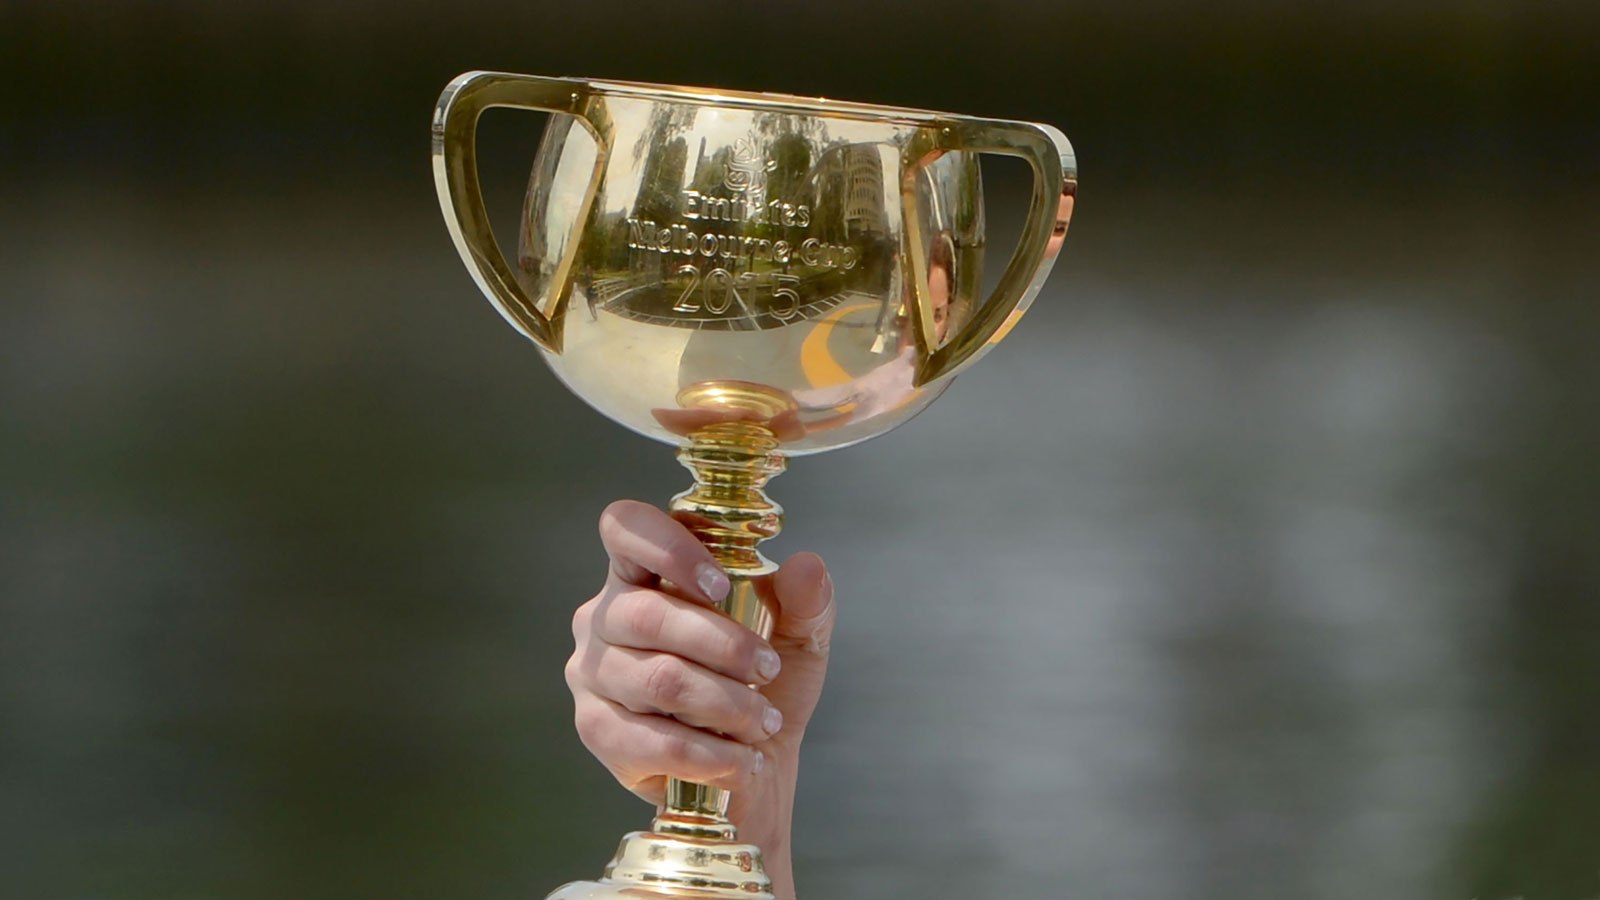 Champion cup вк